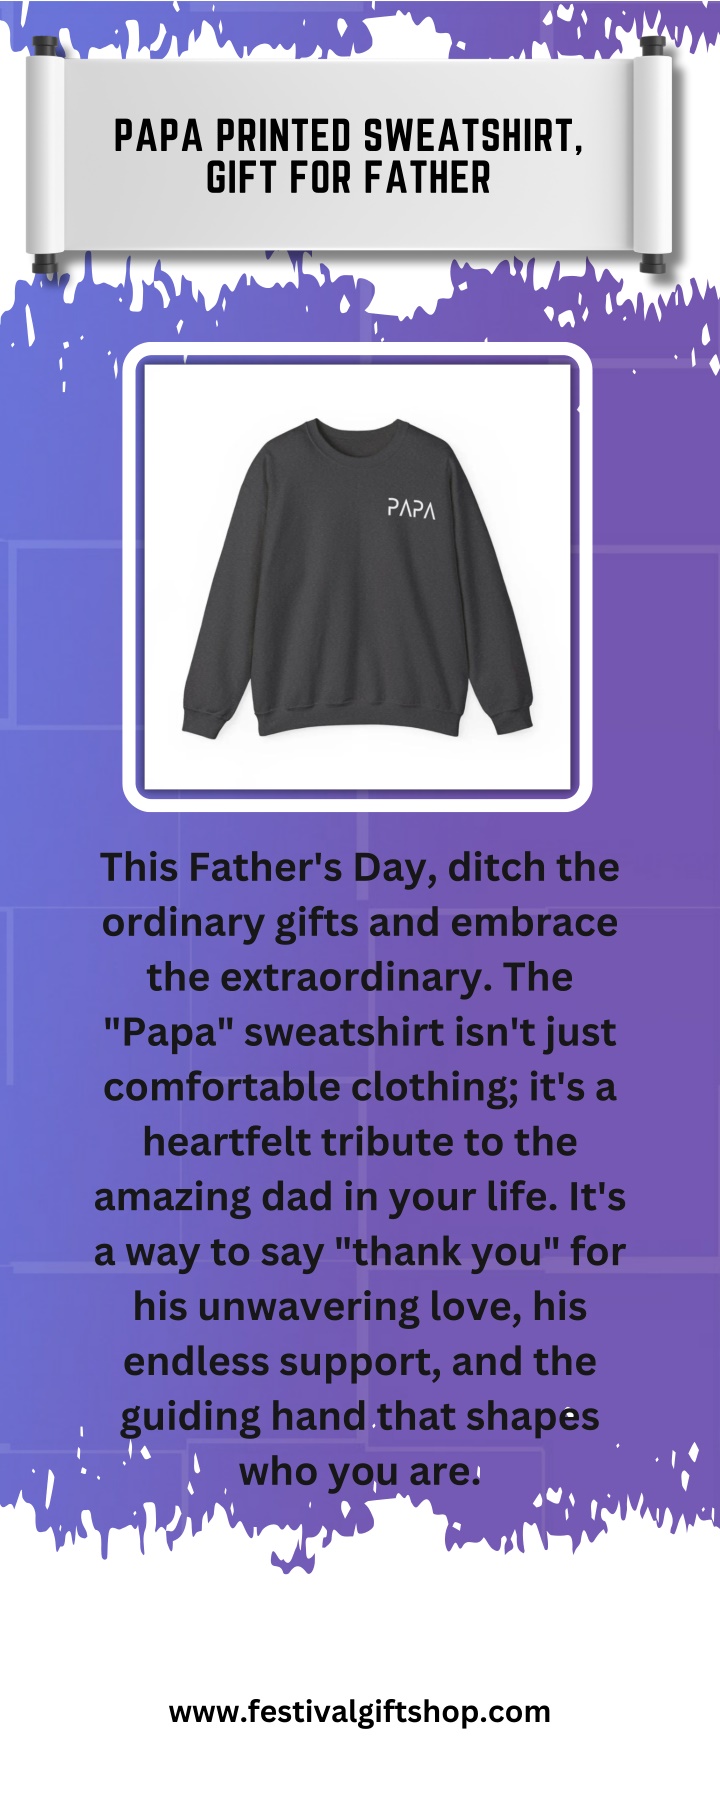 papa printed sweatshirt gift for father